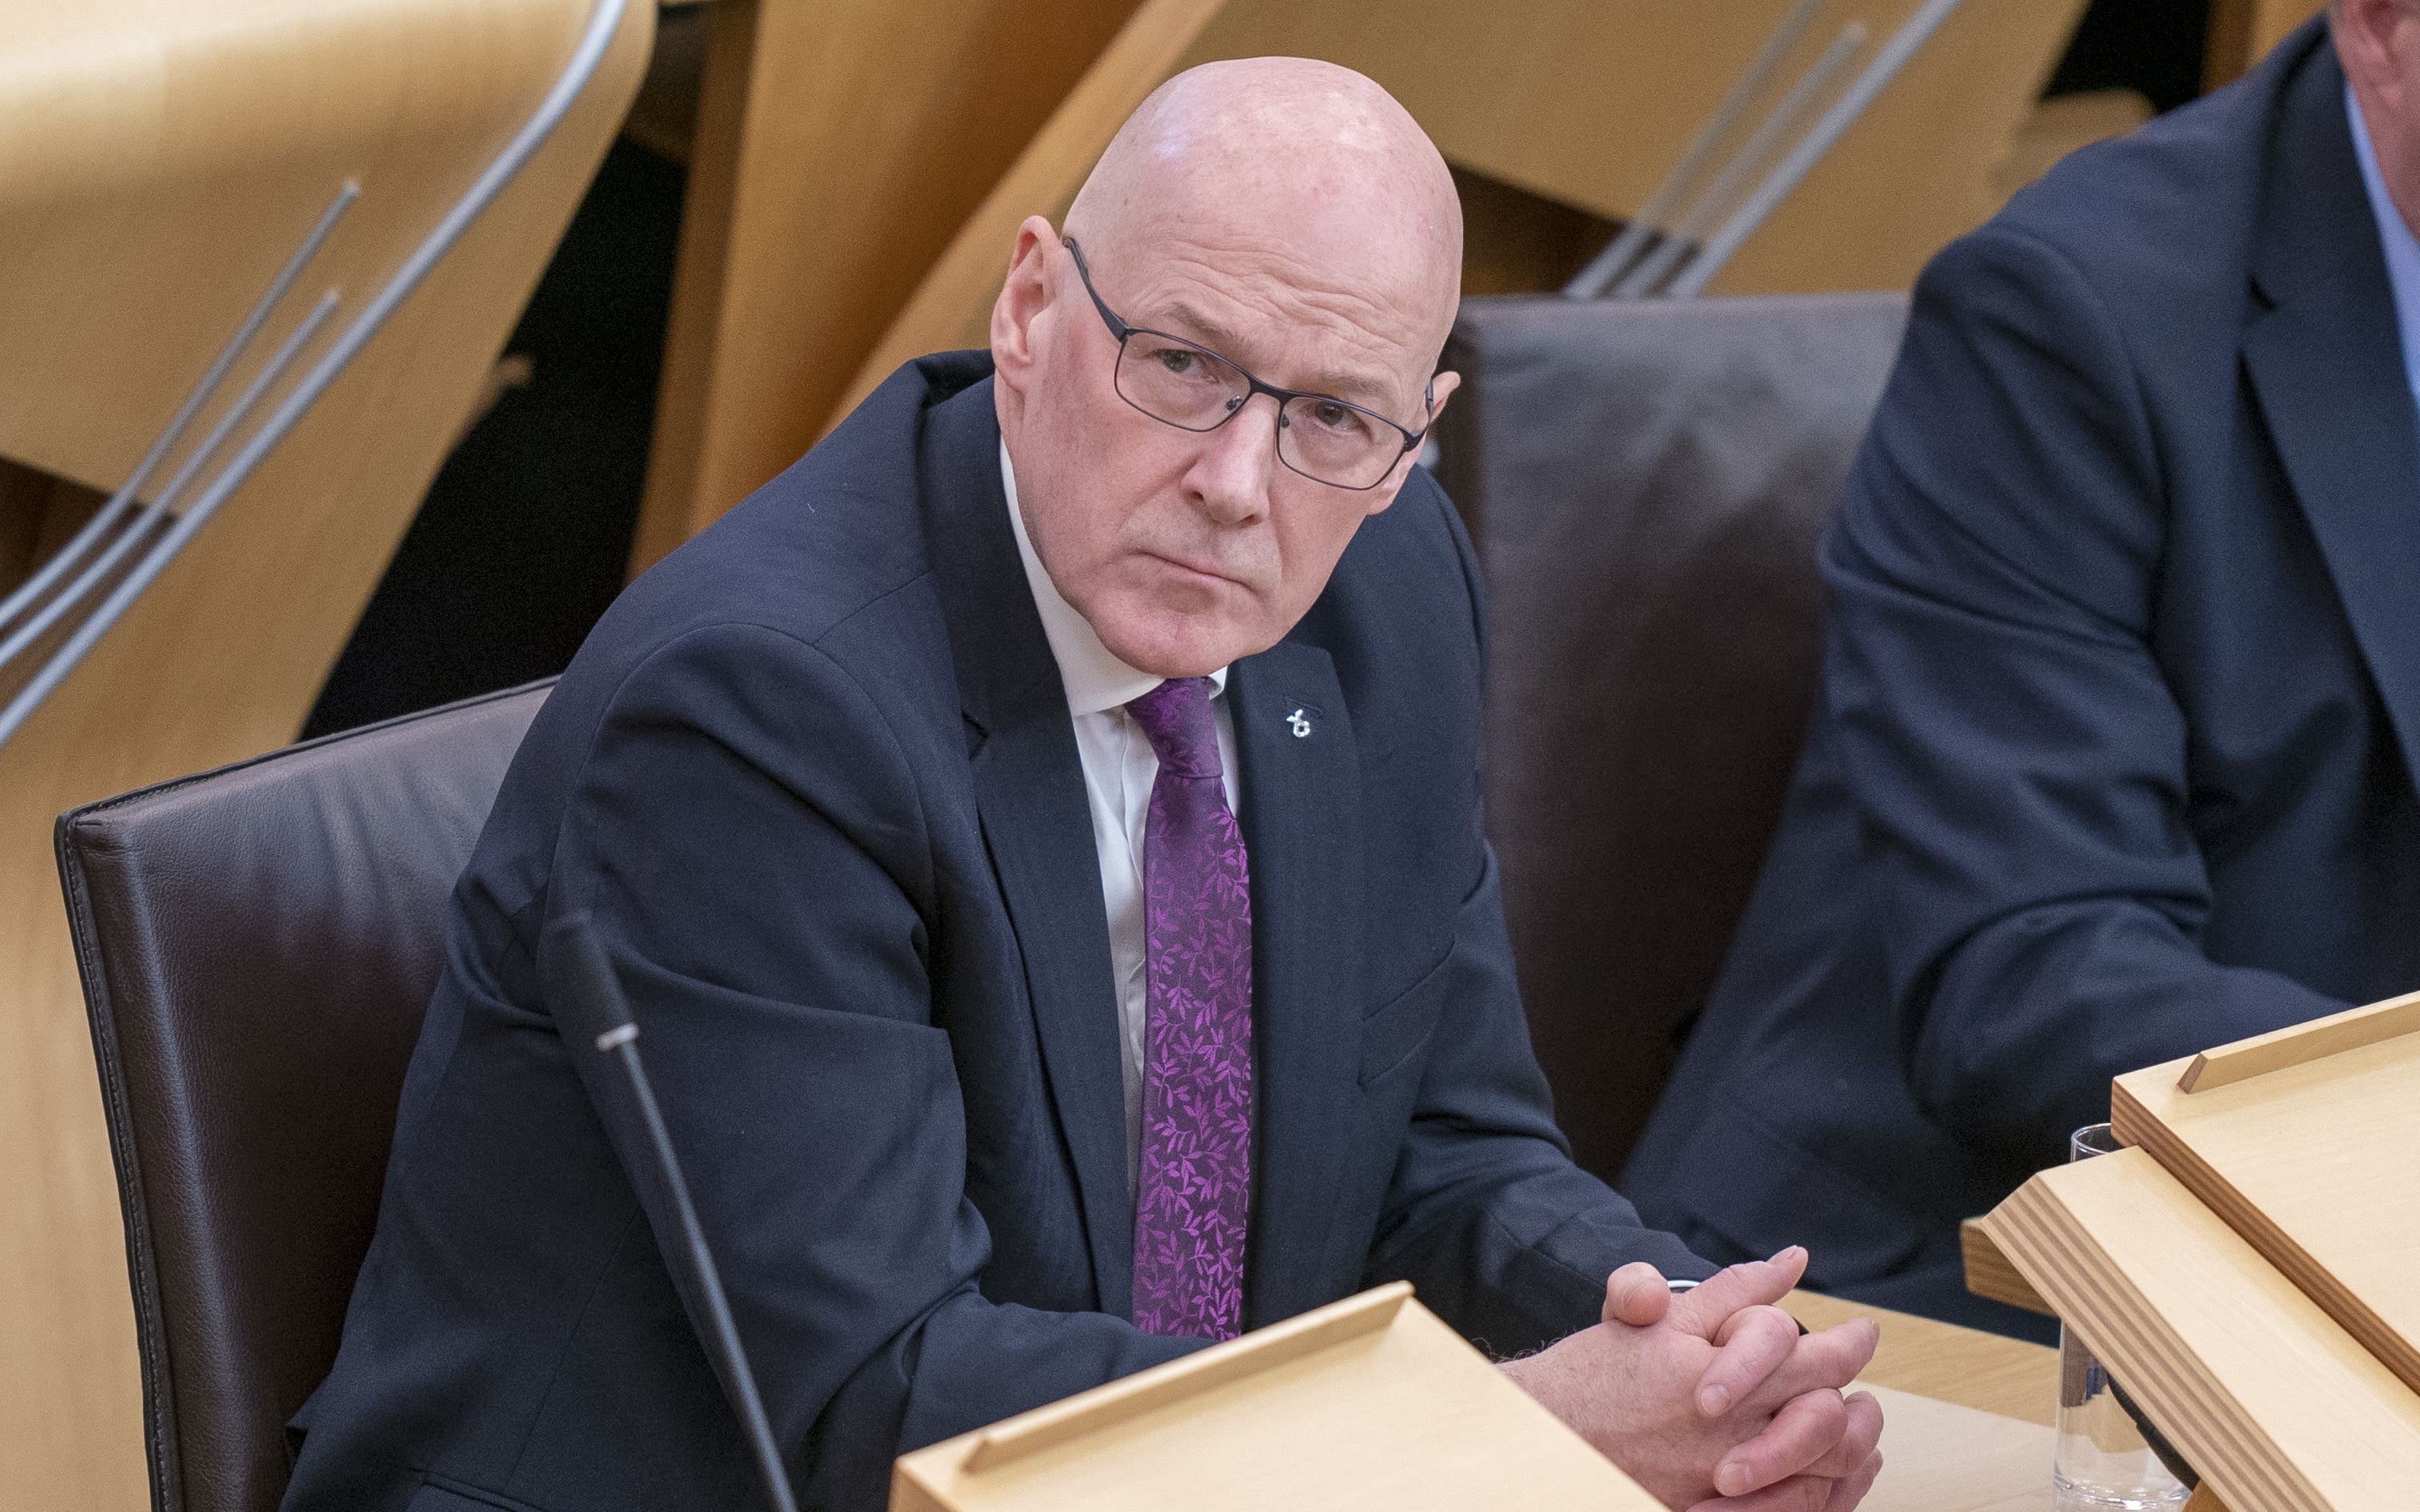 John Swinney to make statement on SNP leadership election